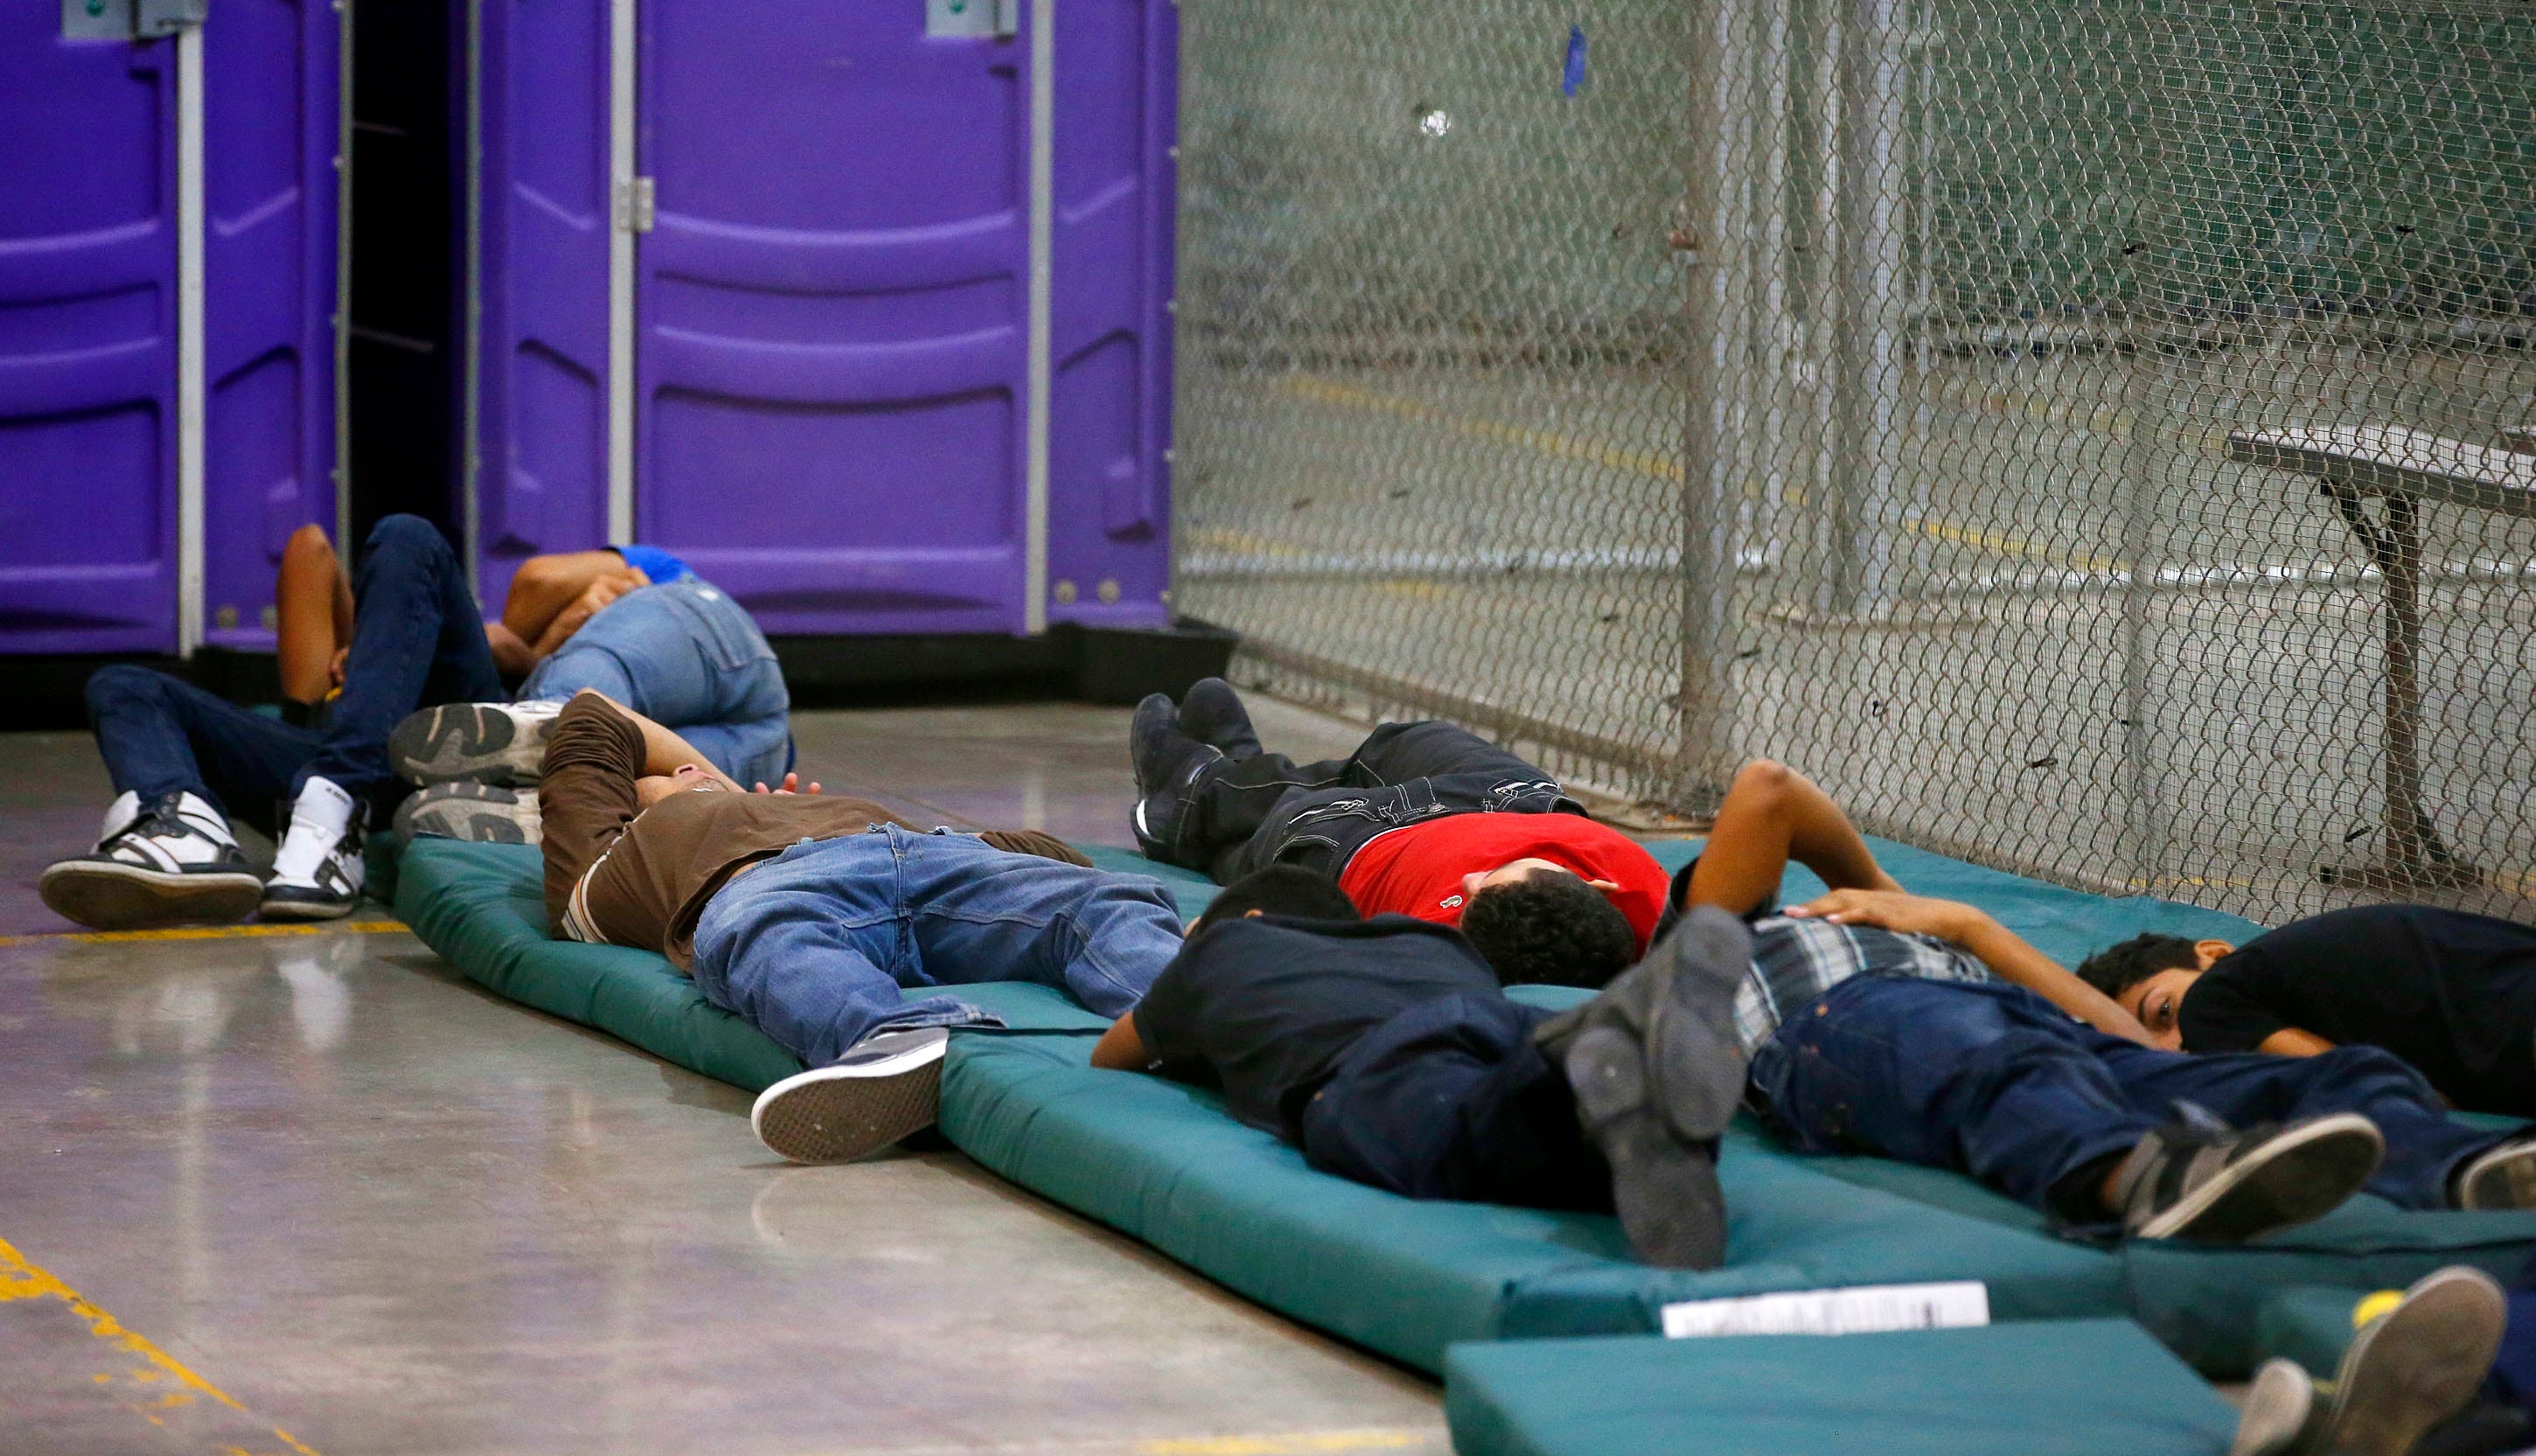 http://www.gannett-cdn.com/media/USATODAY/USATODAY/2014/06/18/1403127721017-AP-Immigration-Overload-042.jpg